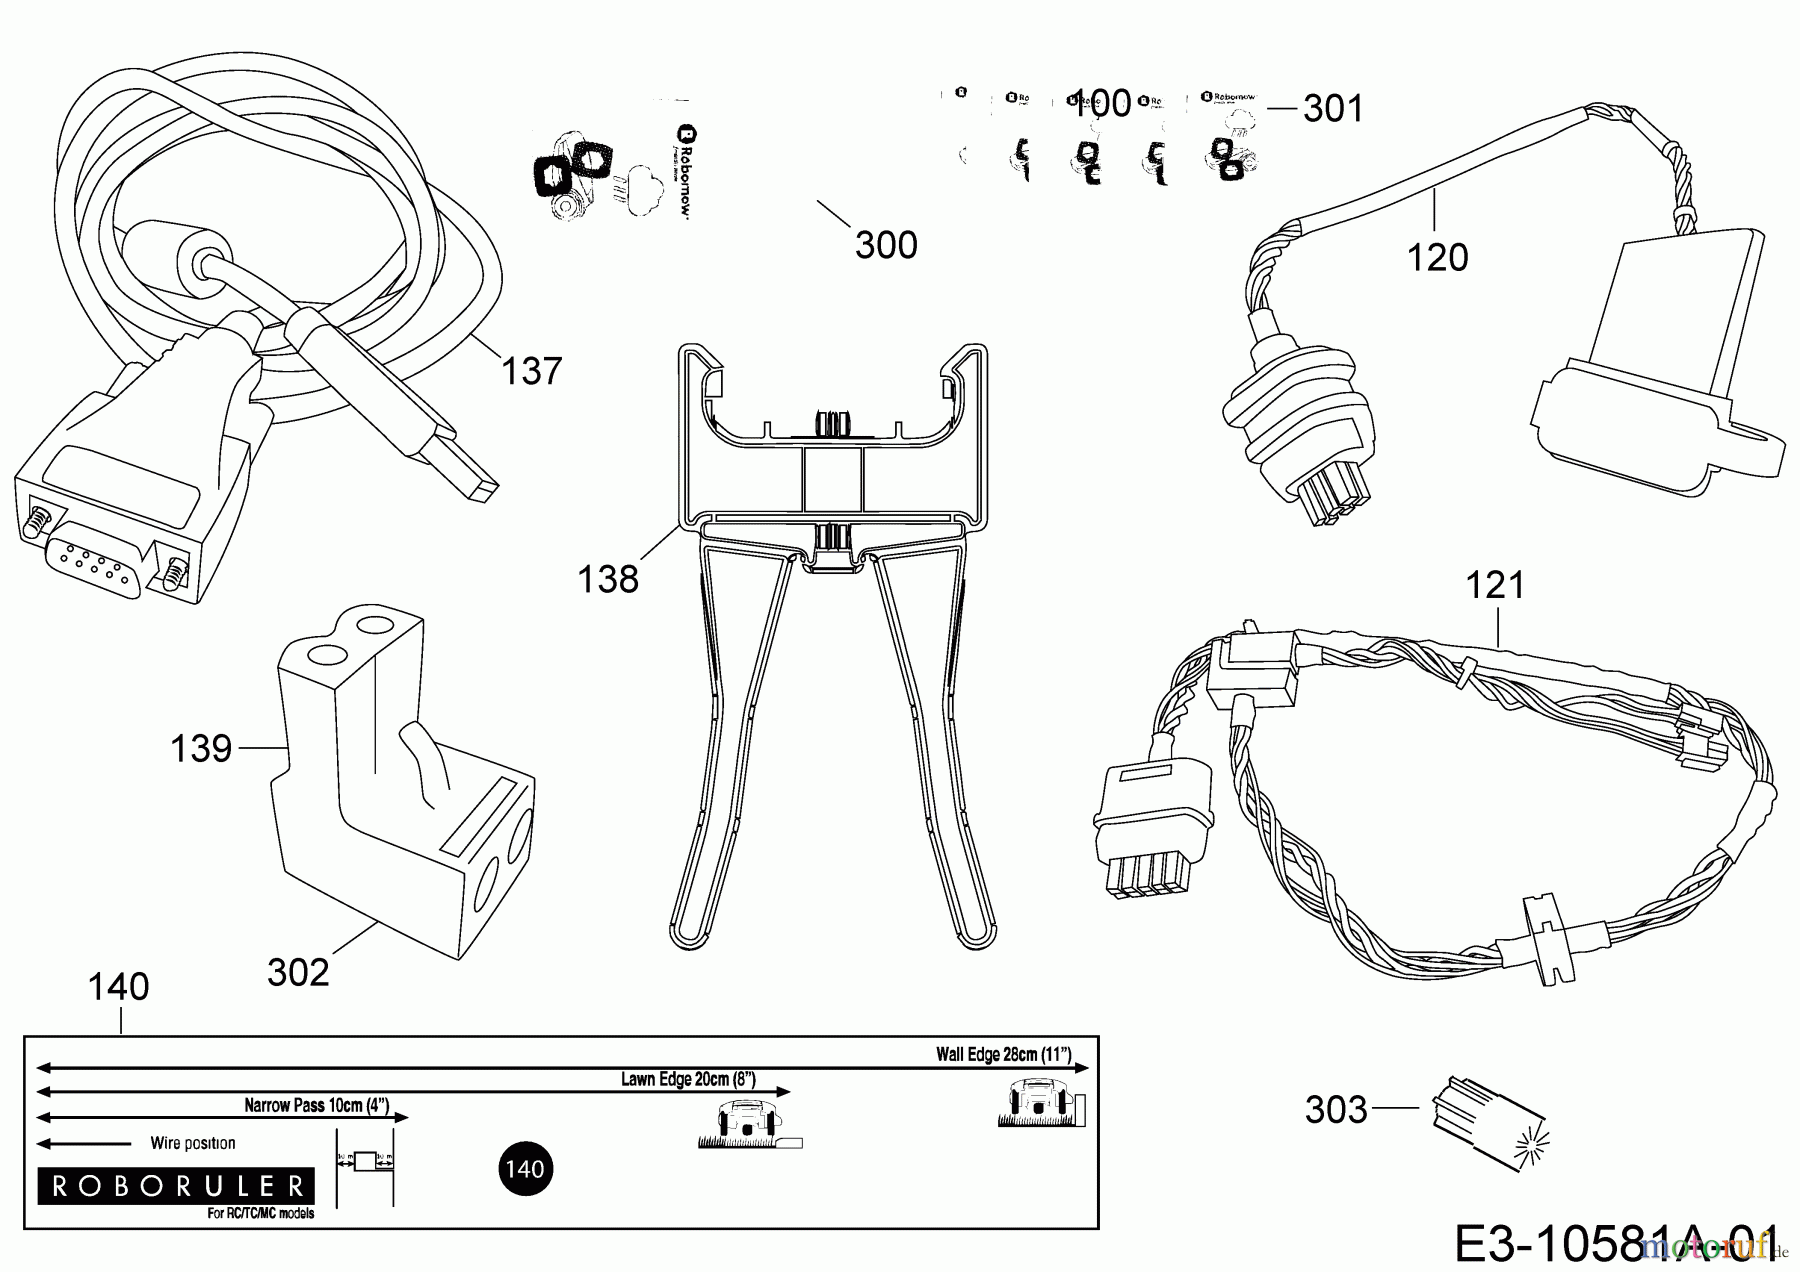  Robomow Mähroboter RC304 (White) PRD7004BW  (2015) Kabel, Kabelanschluß, Regensensor, Werkzeug